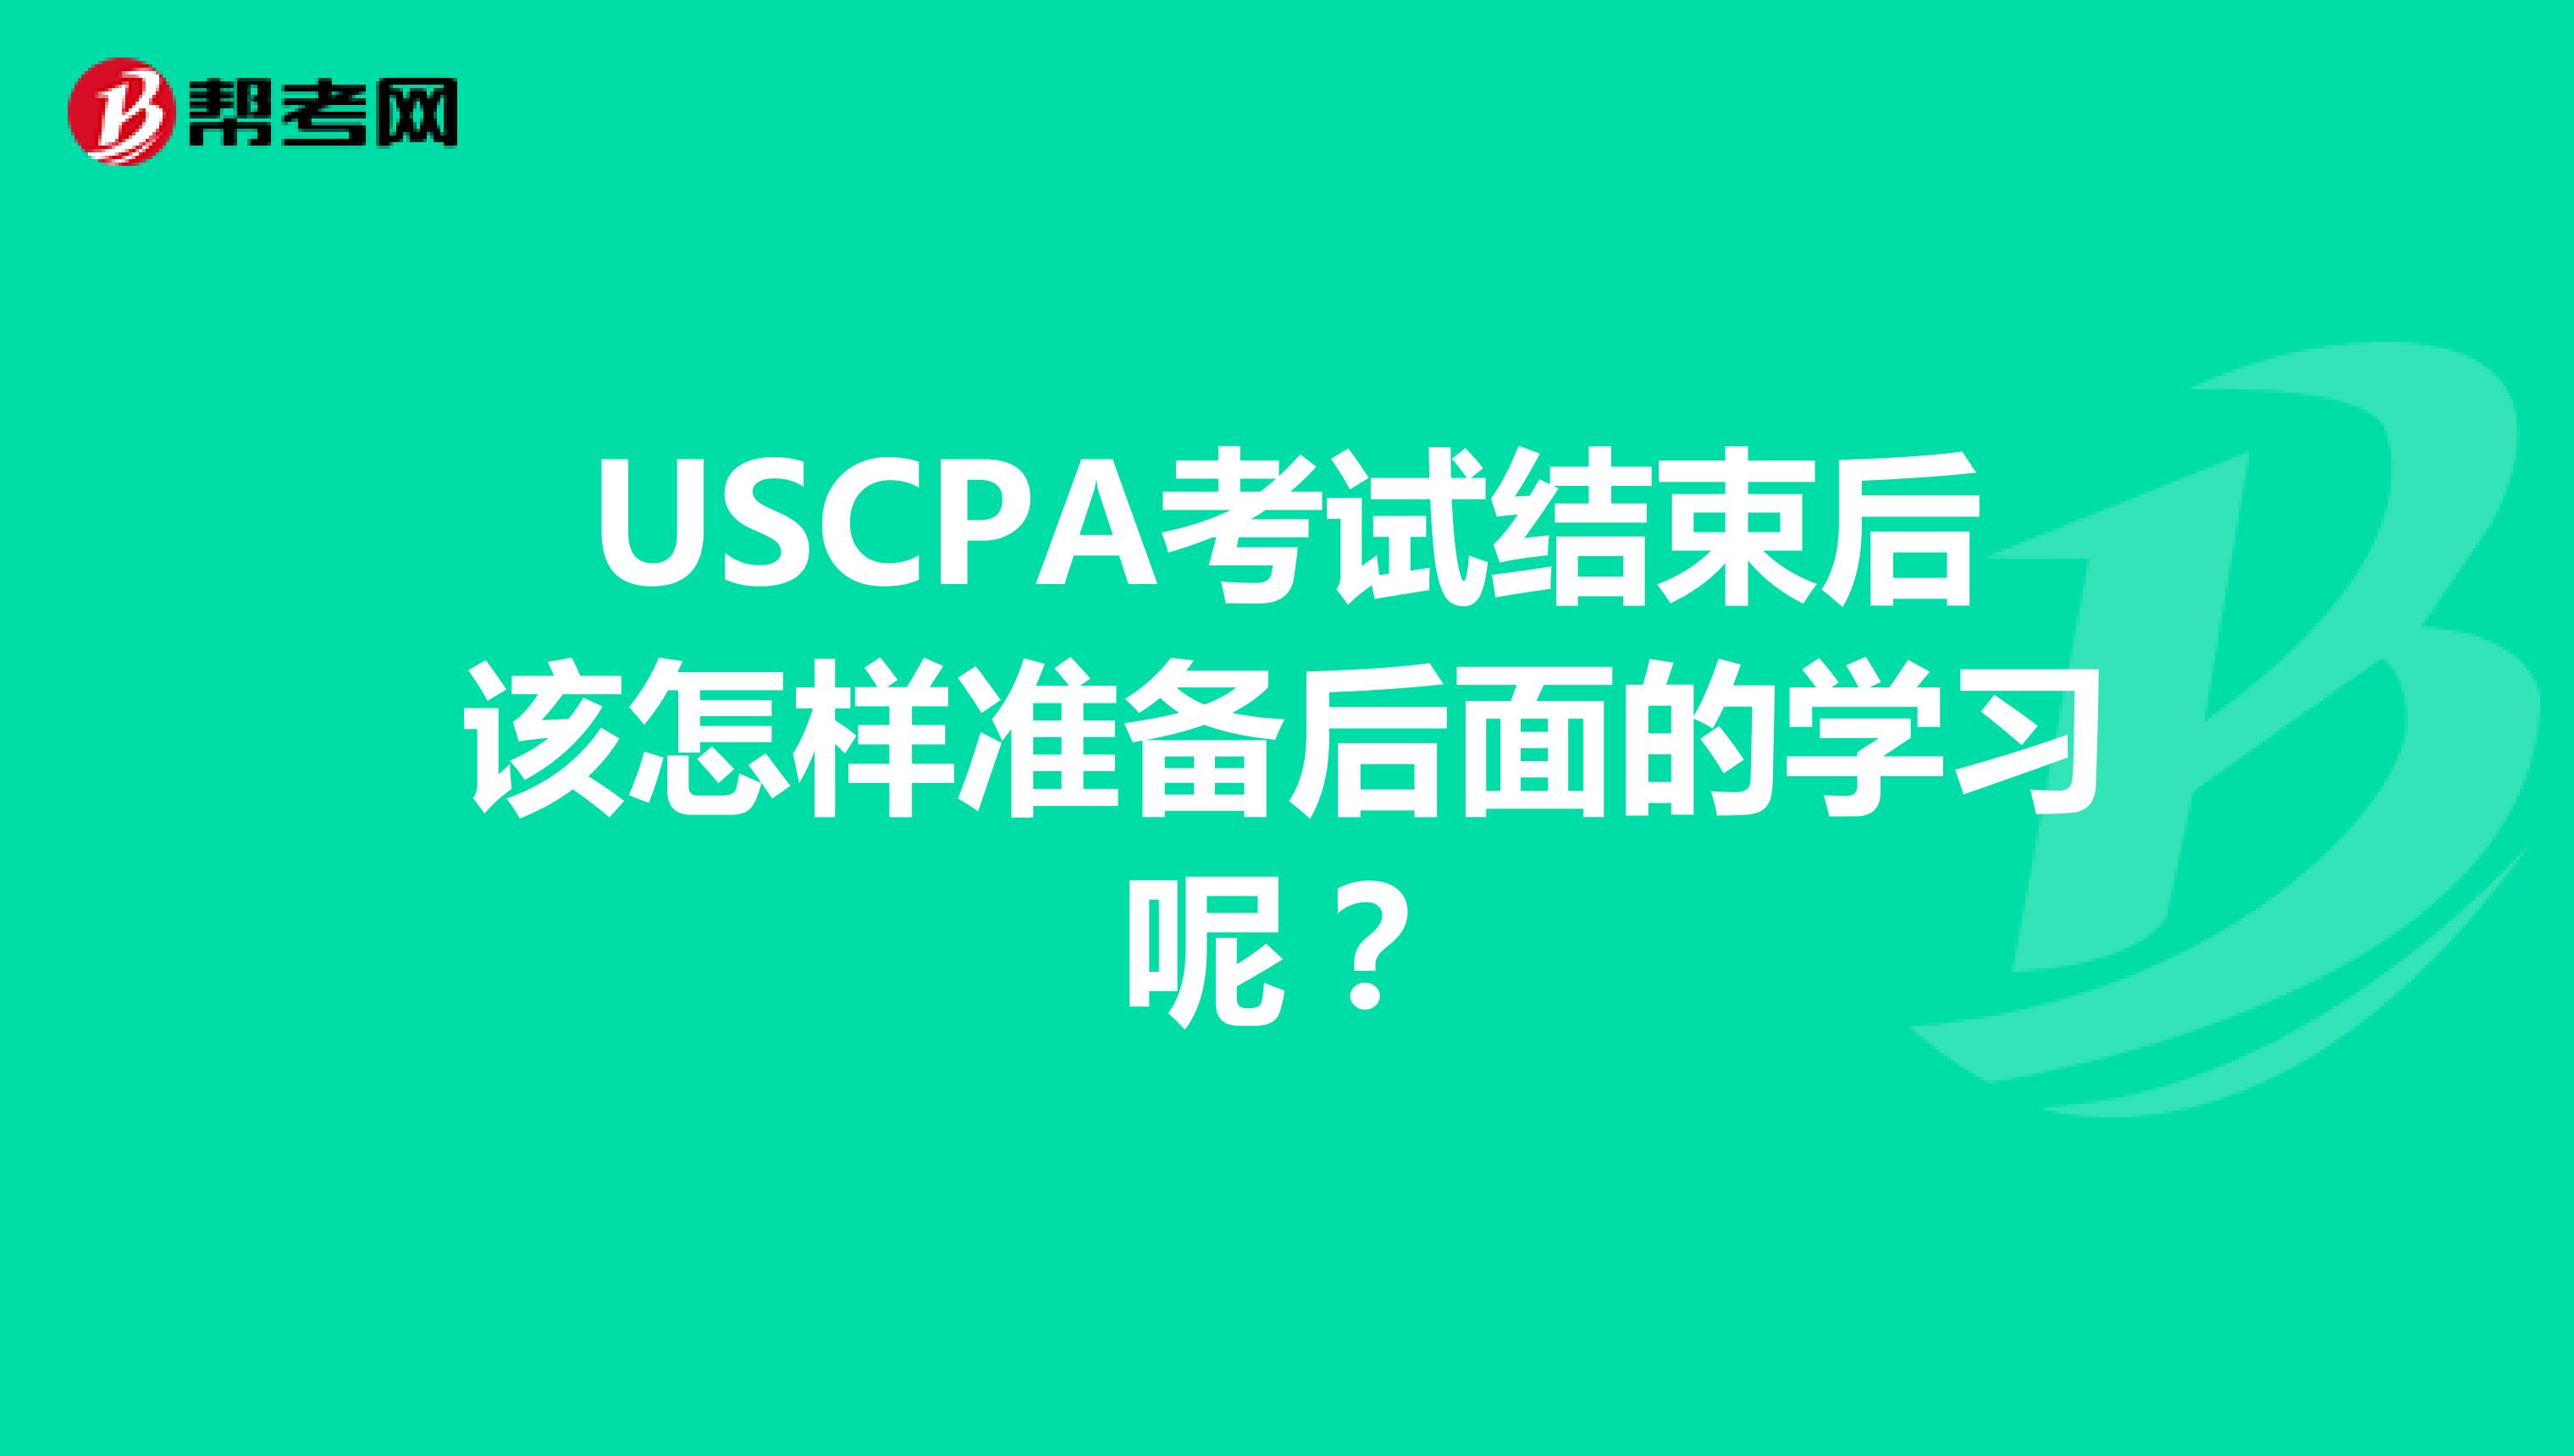 USCPA考试结束后该怎样准备后面的学习呢？